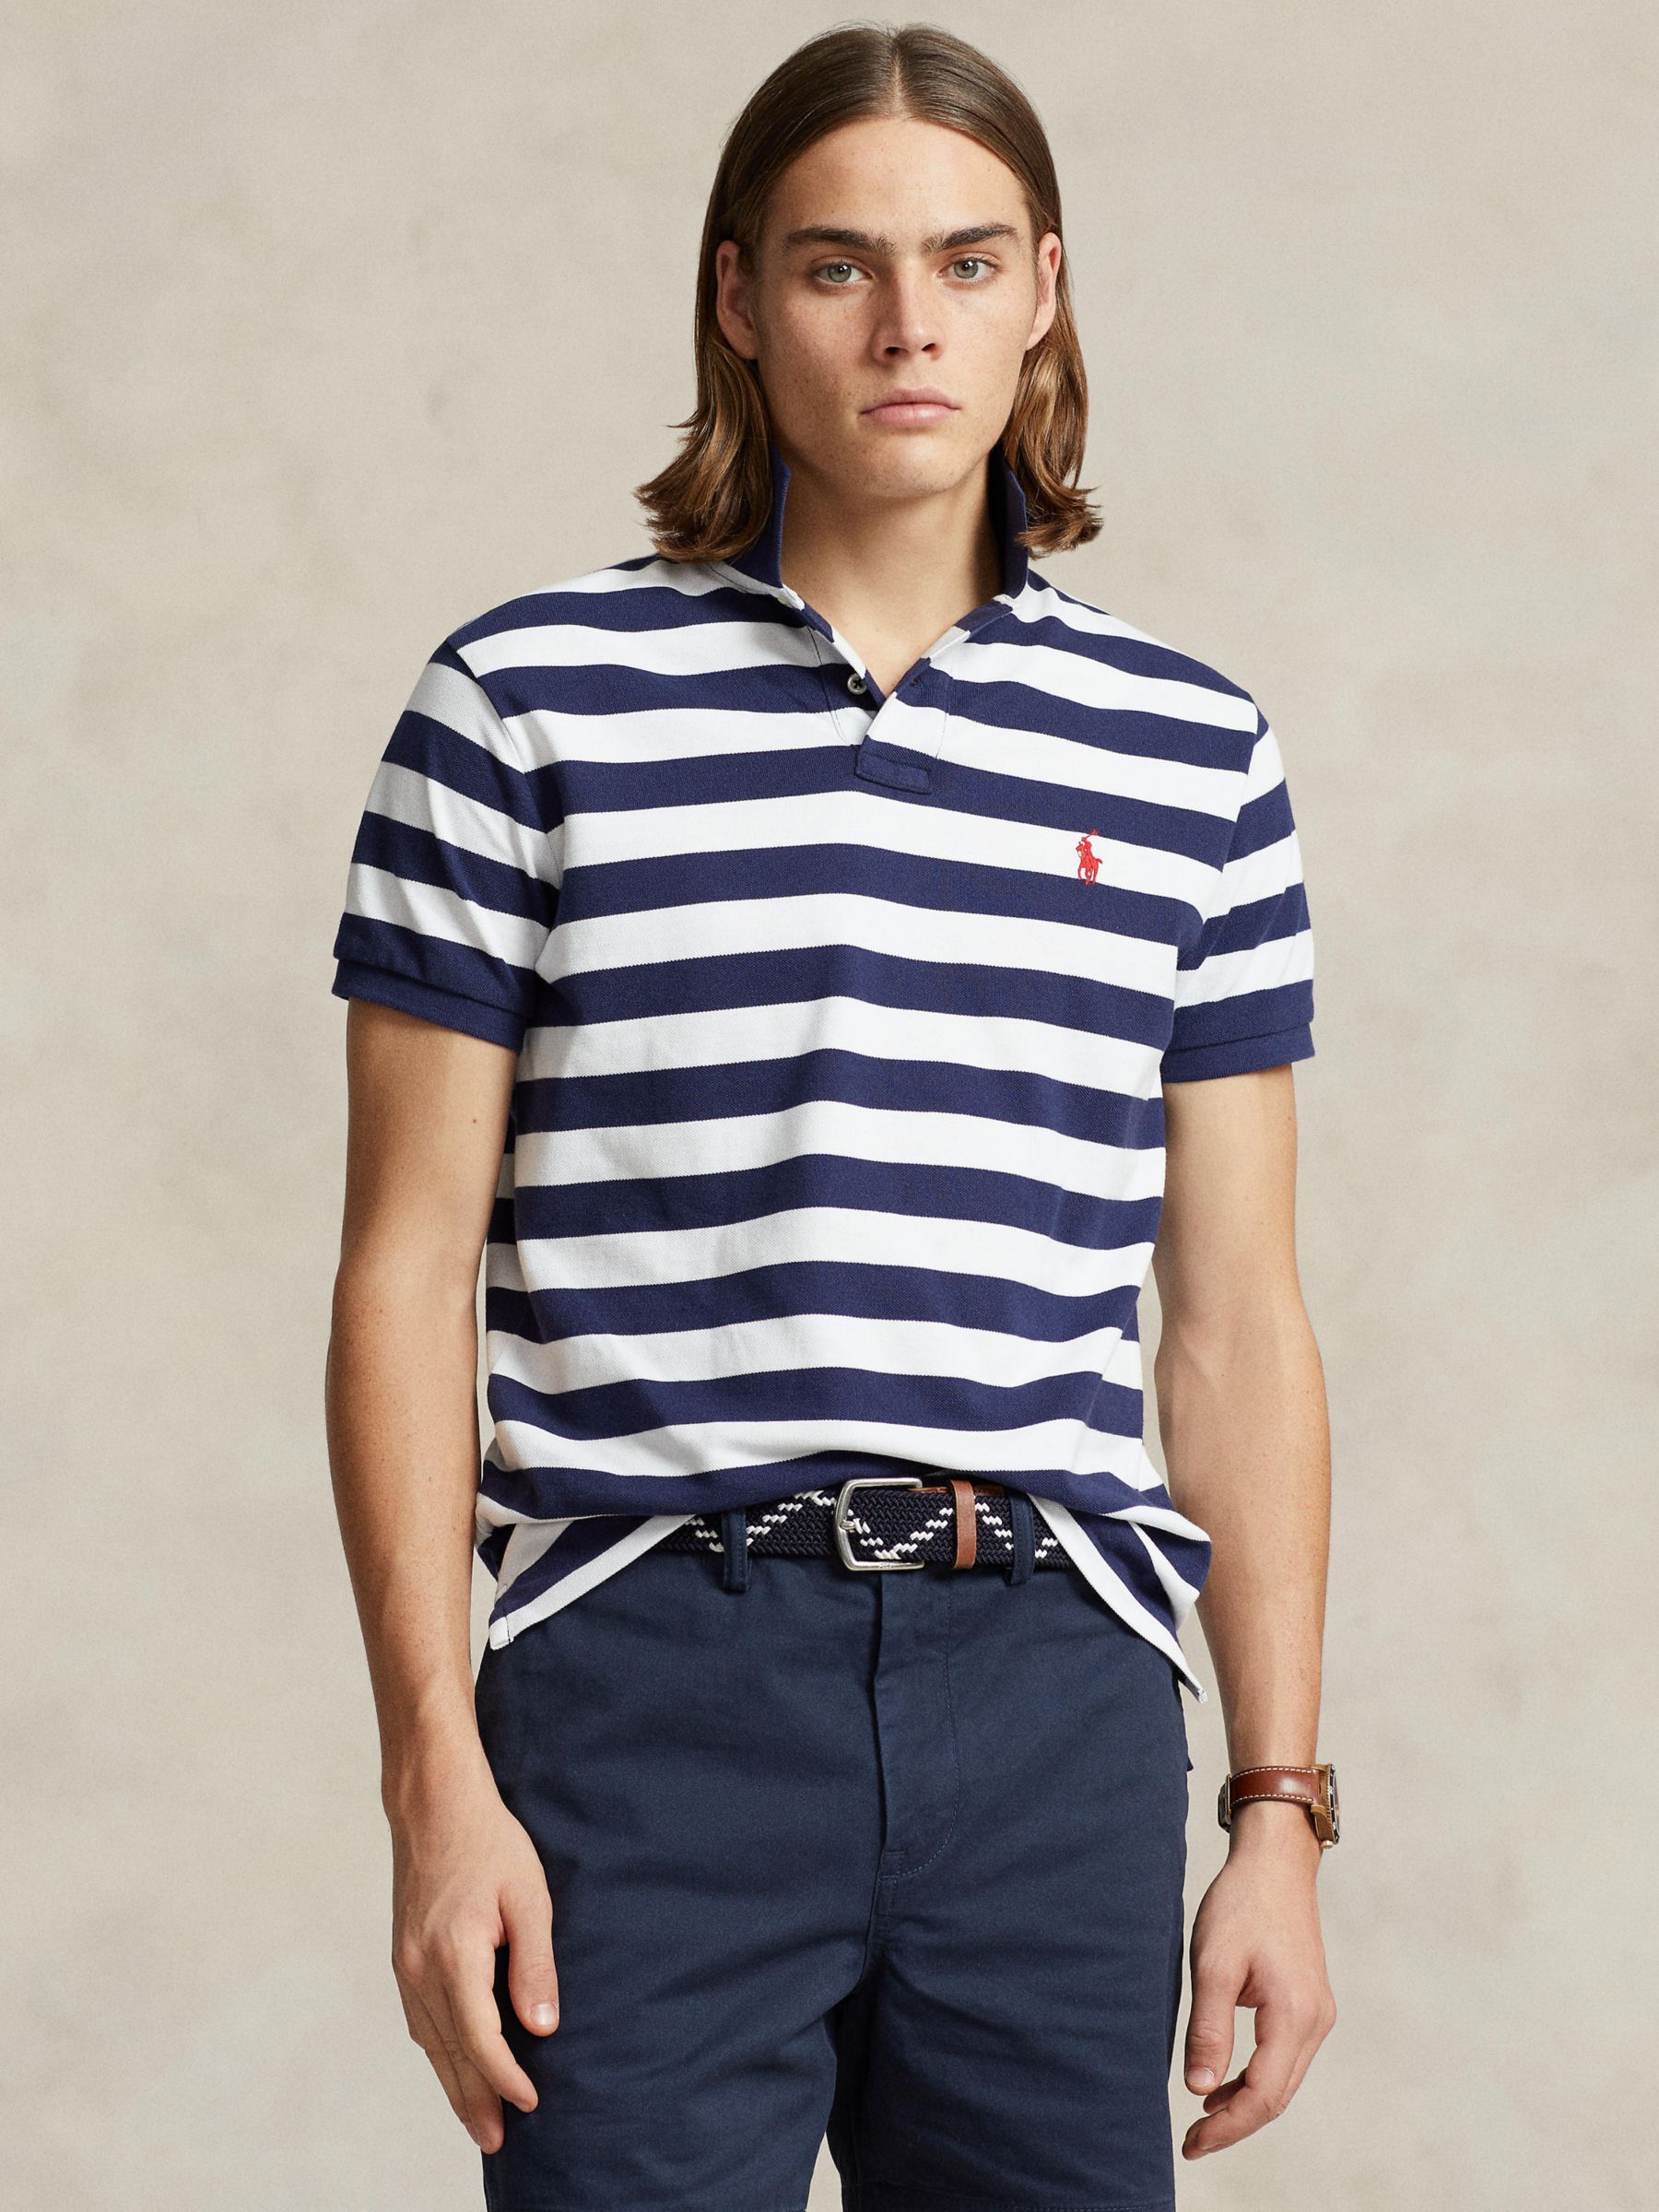 Ralph Lauren Striped Cotton Custom Slim Fit Mesh Polo Shirt, Navy/White, M